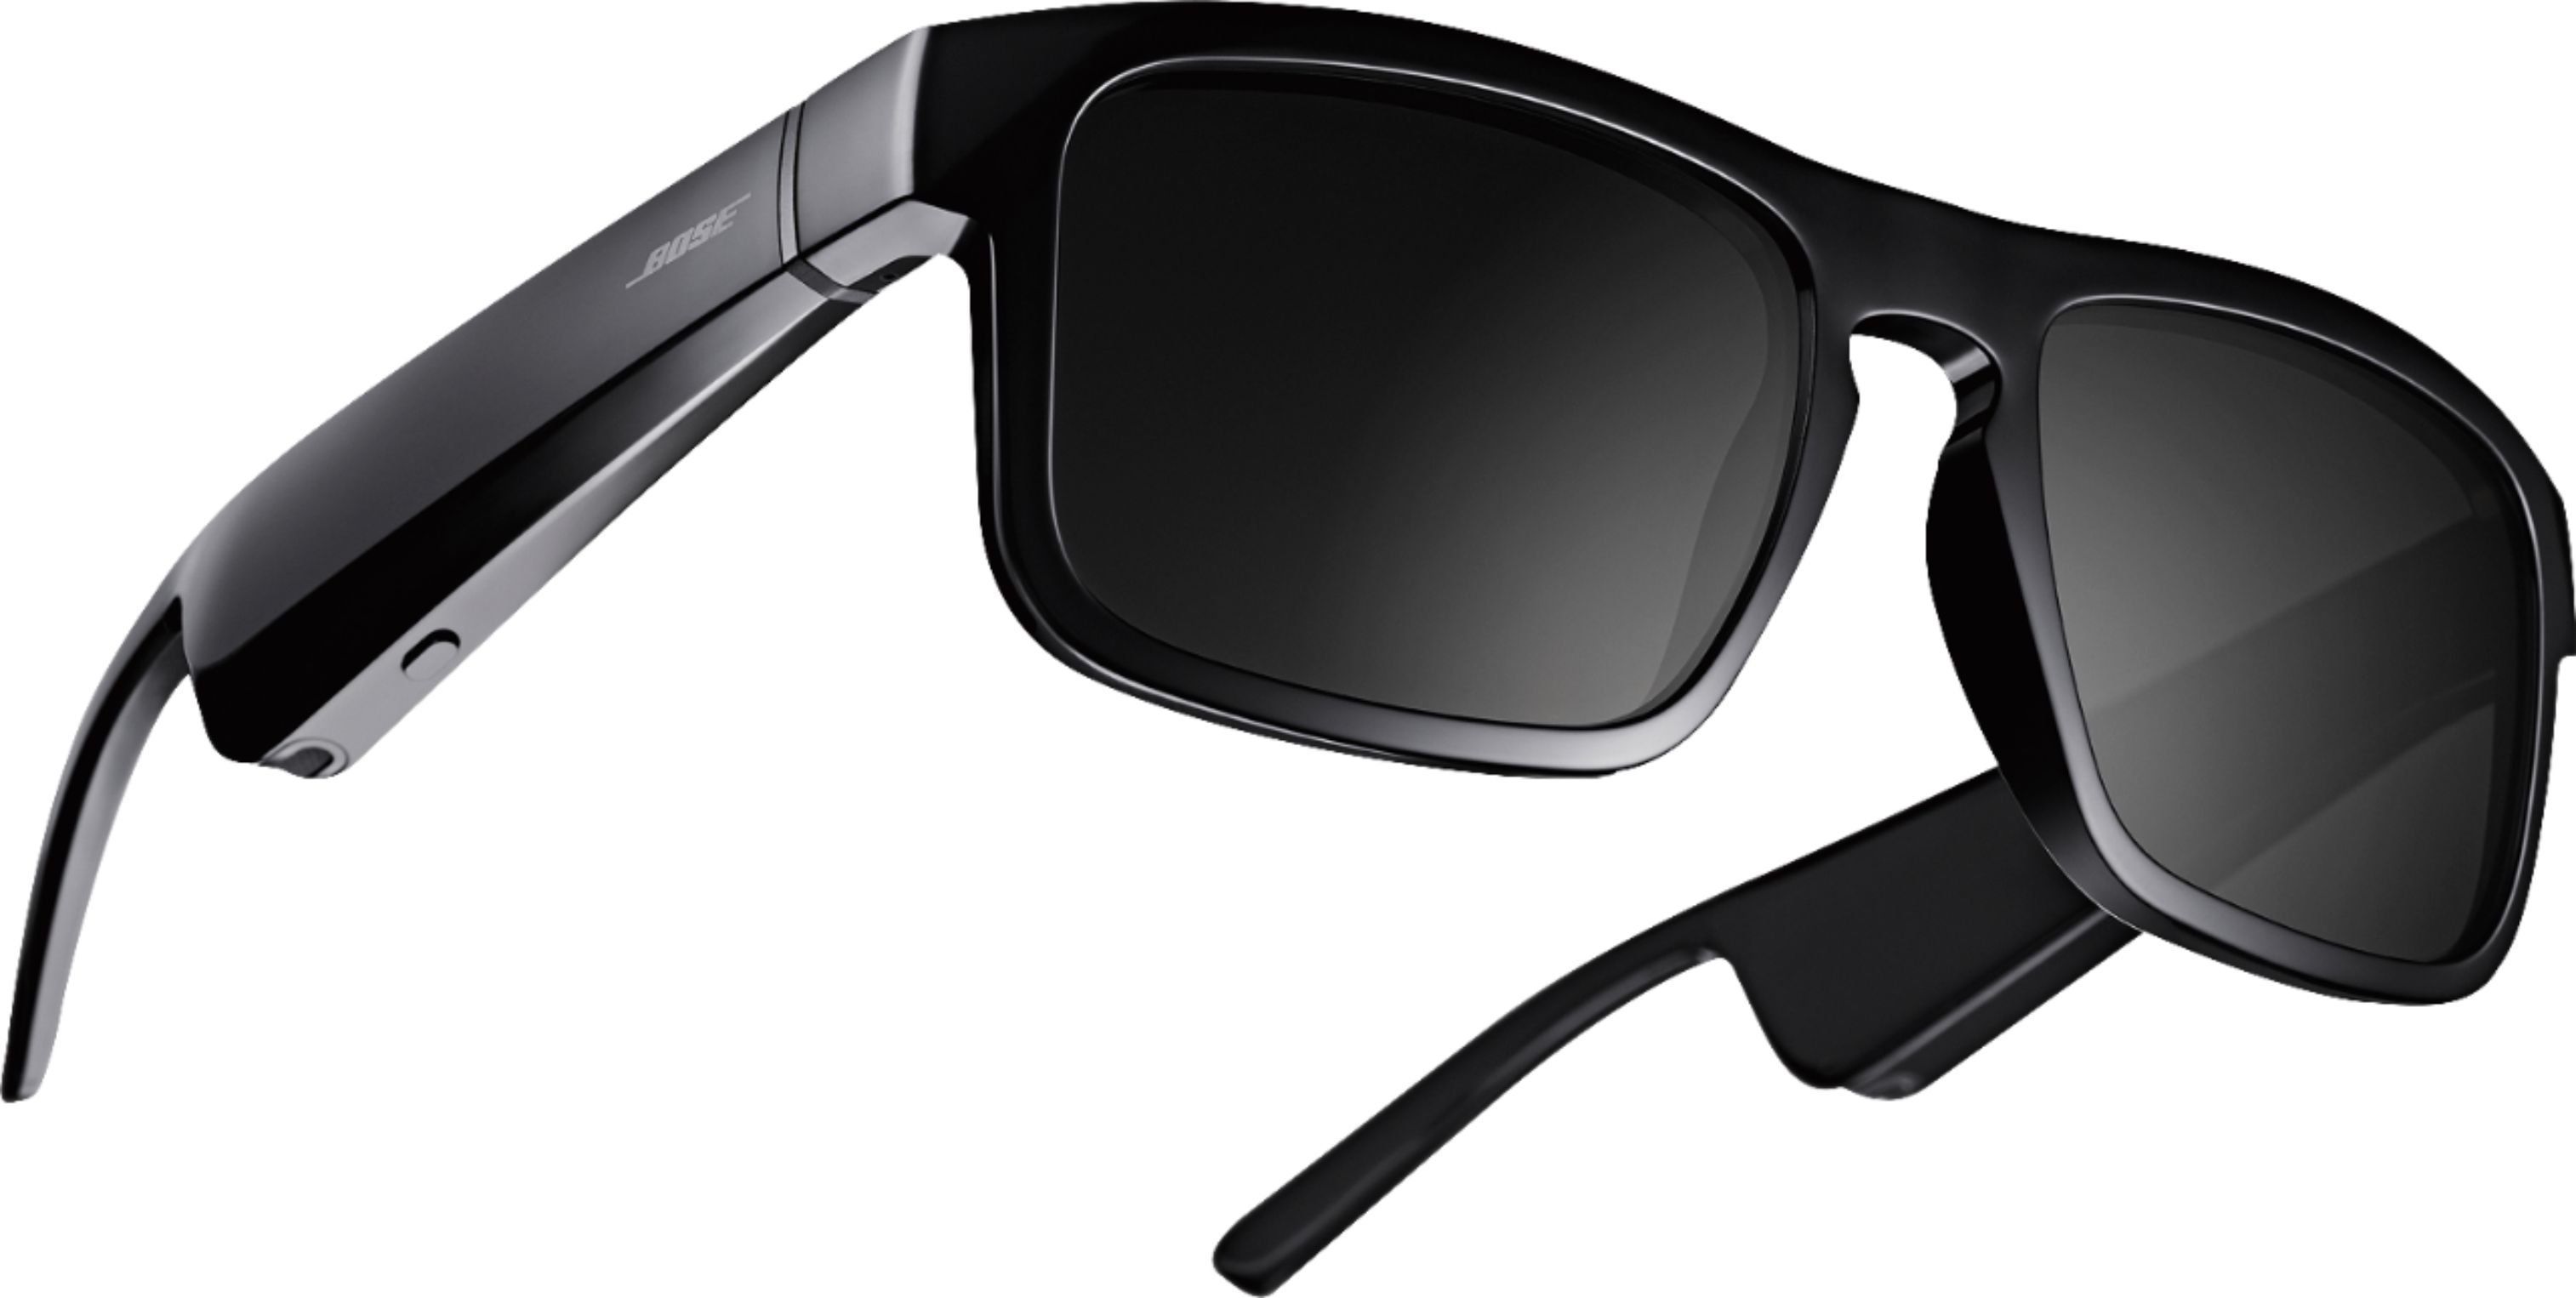 Bose Frames Tenor â Rectangular Bluetooth Audio Sunglasses Black 851338-0110 - Best Buy